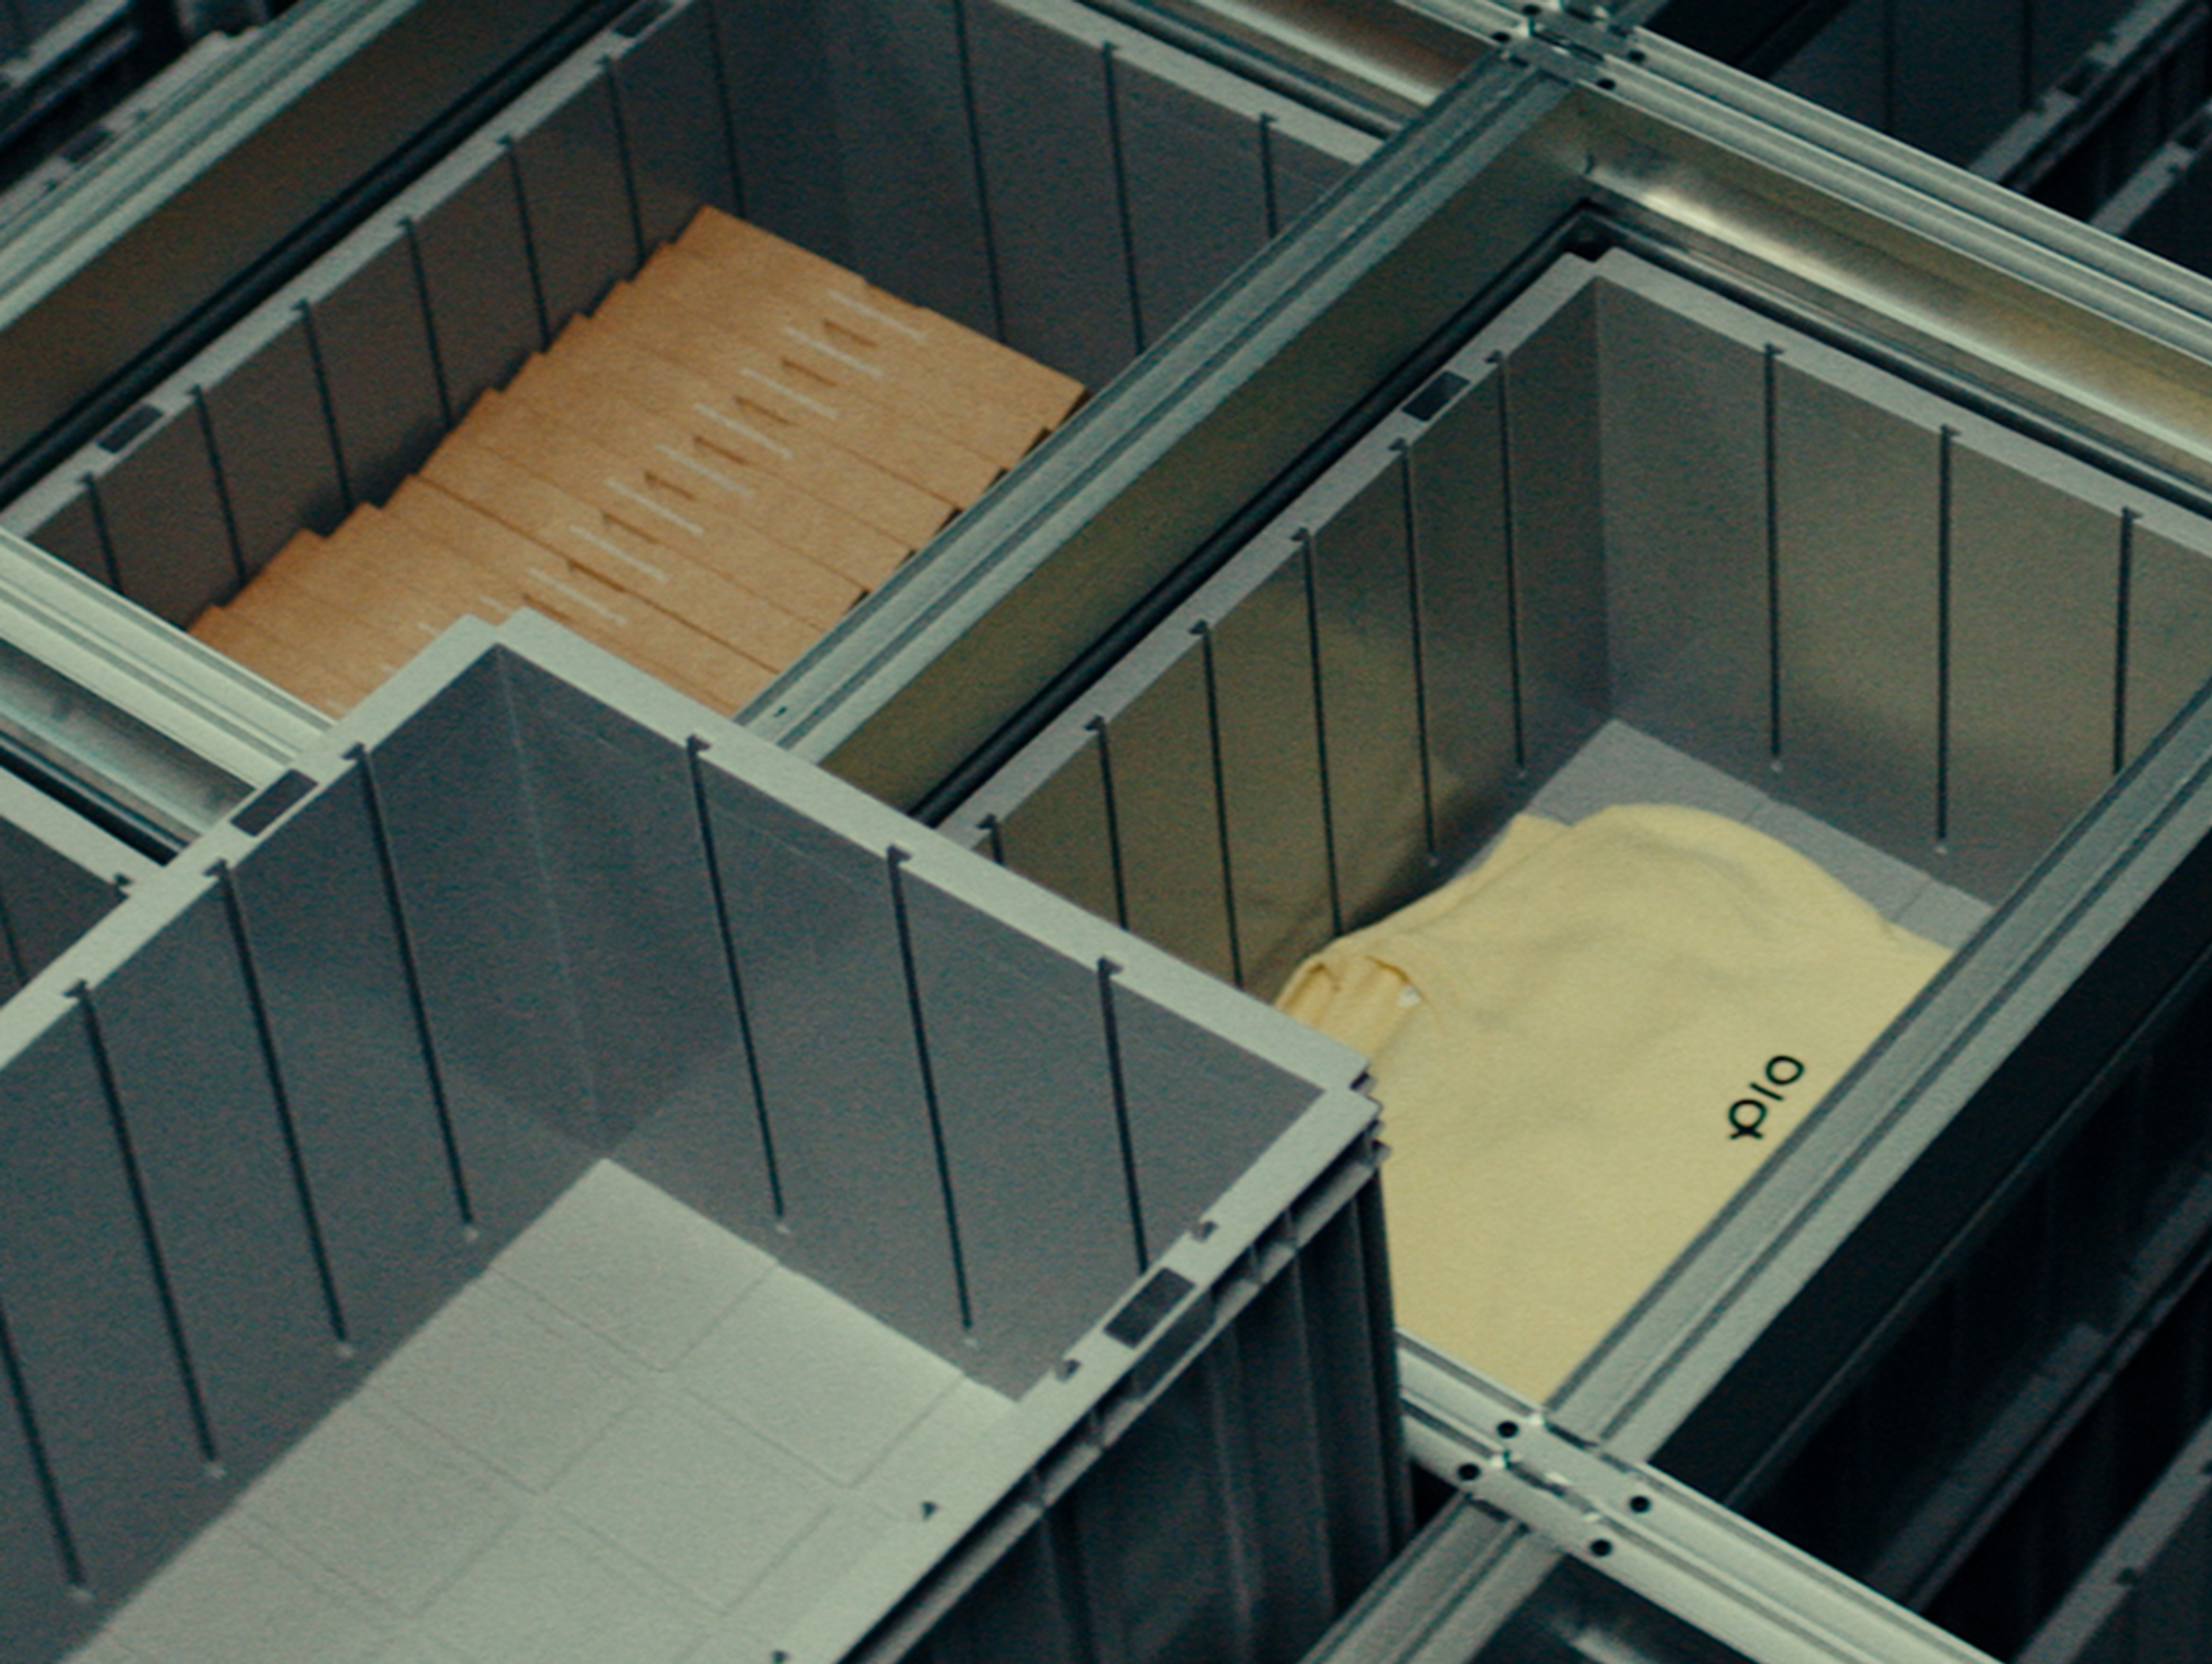 storing boxes inside storing system